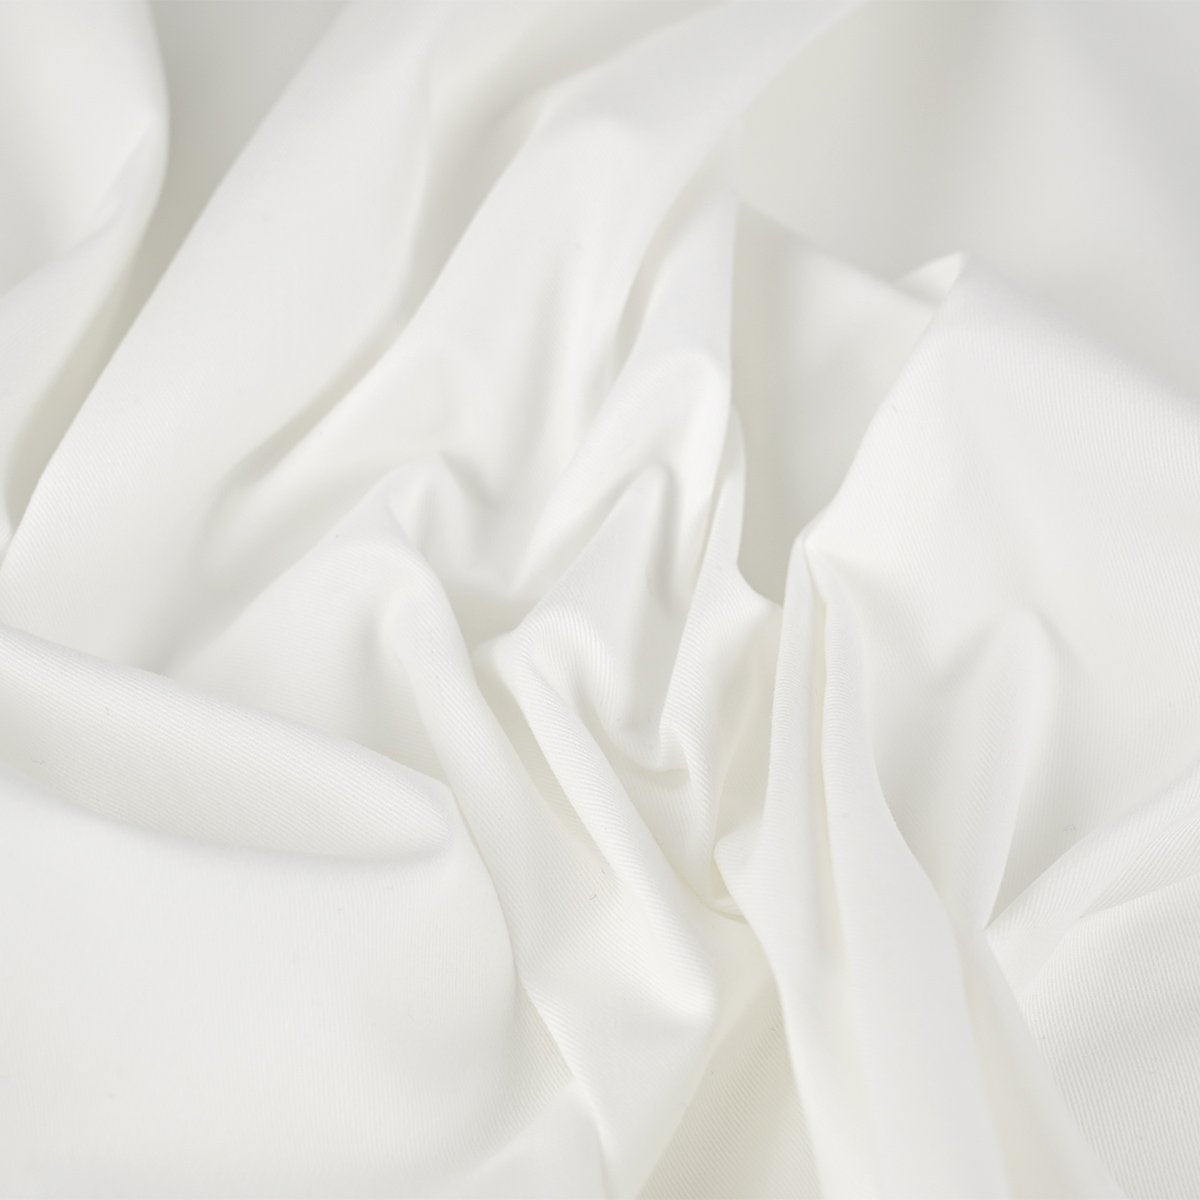 White Stretch Cotton Fabric 97041